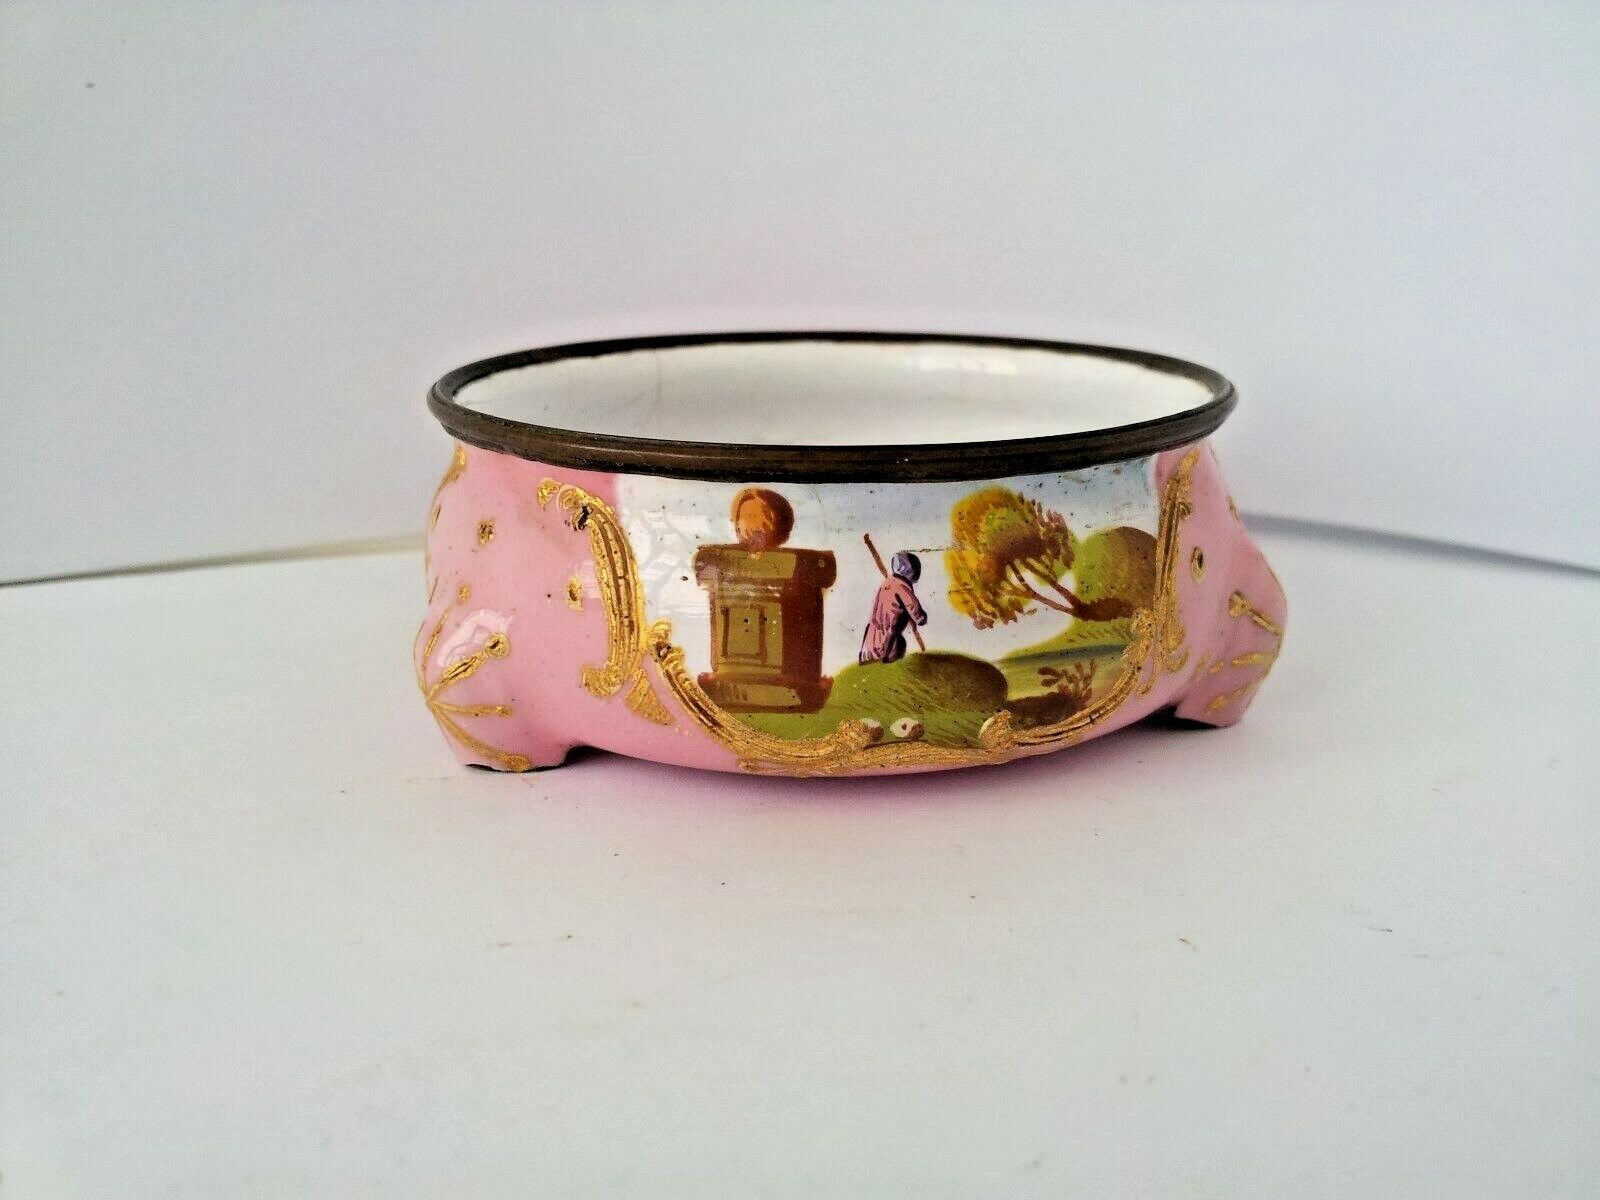  French Enameled Pink Trinket Bowl, 18th century, Gorgeous